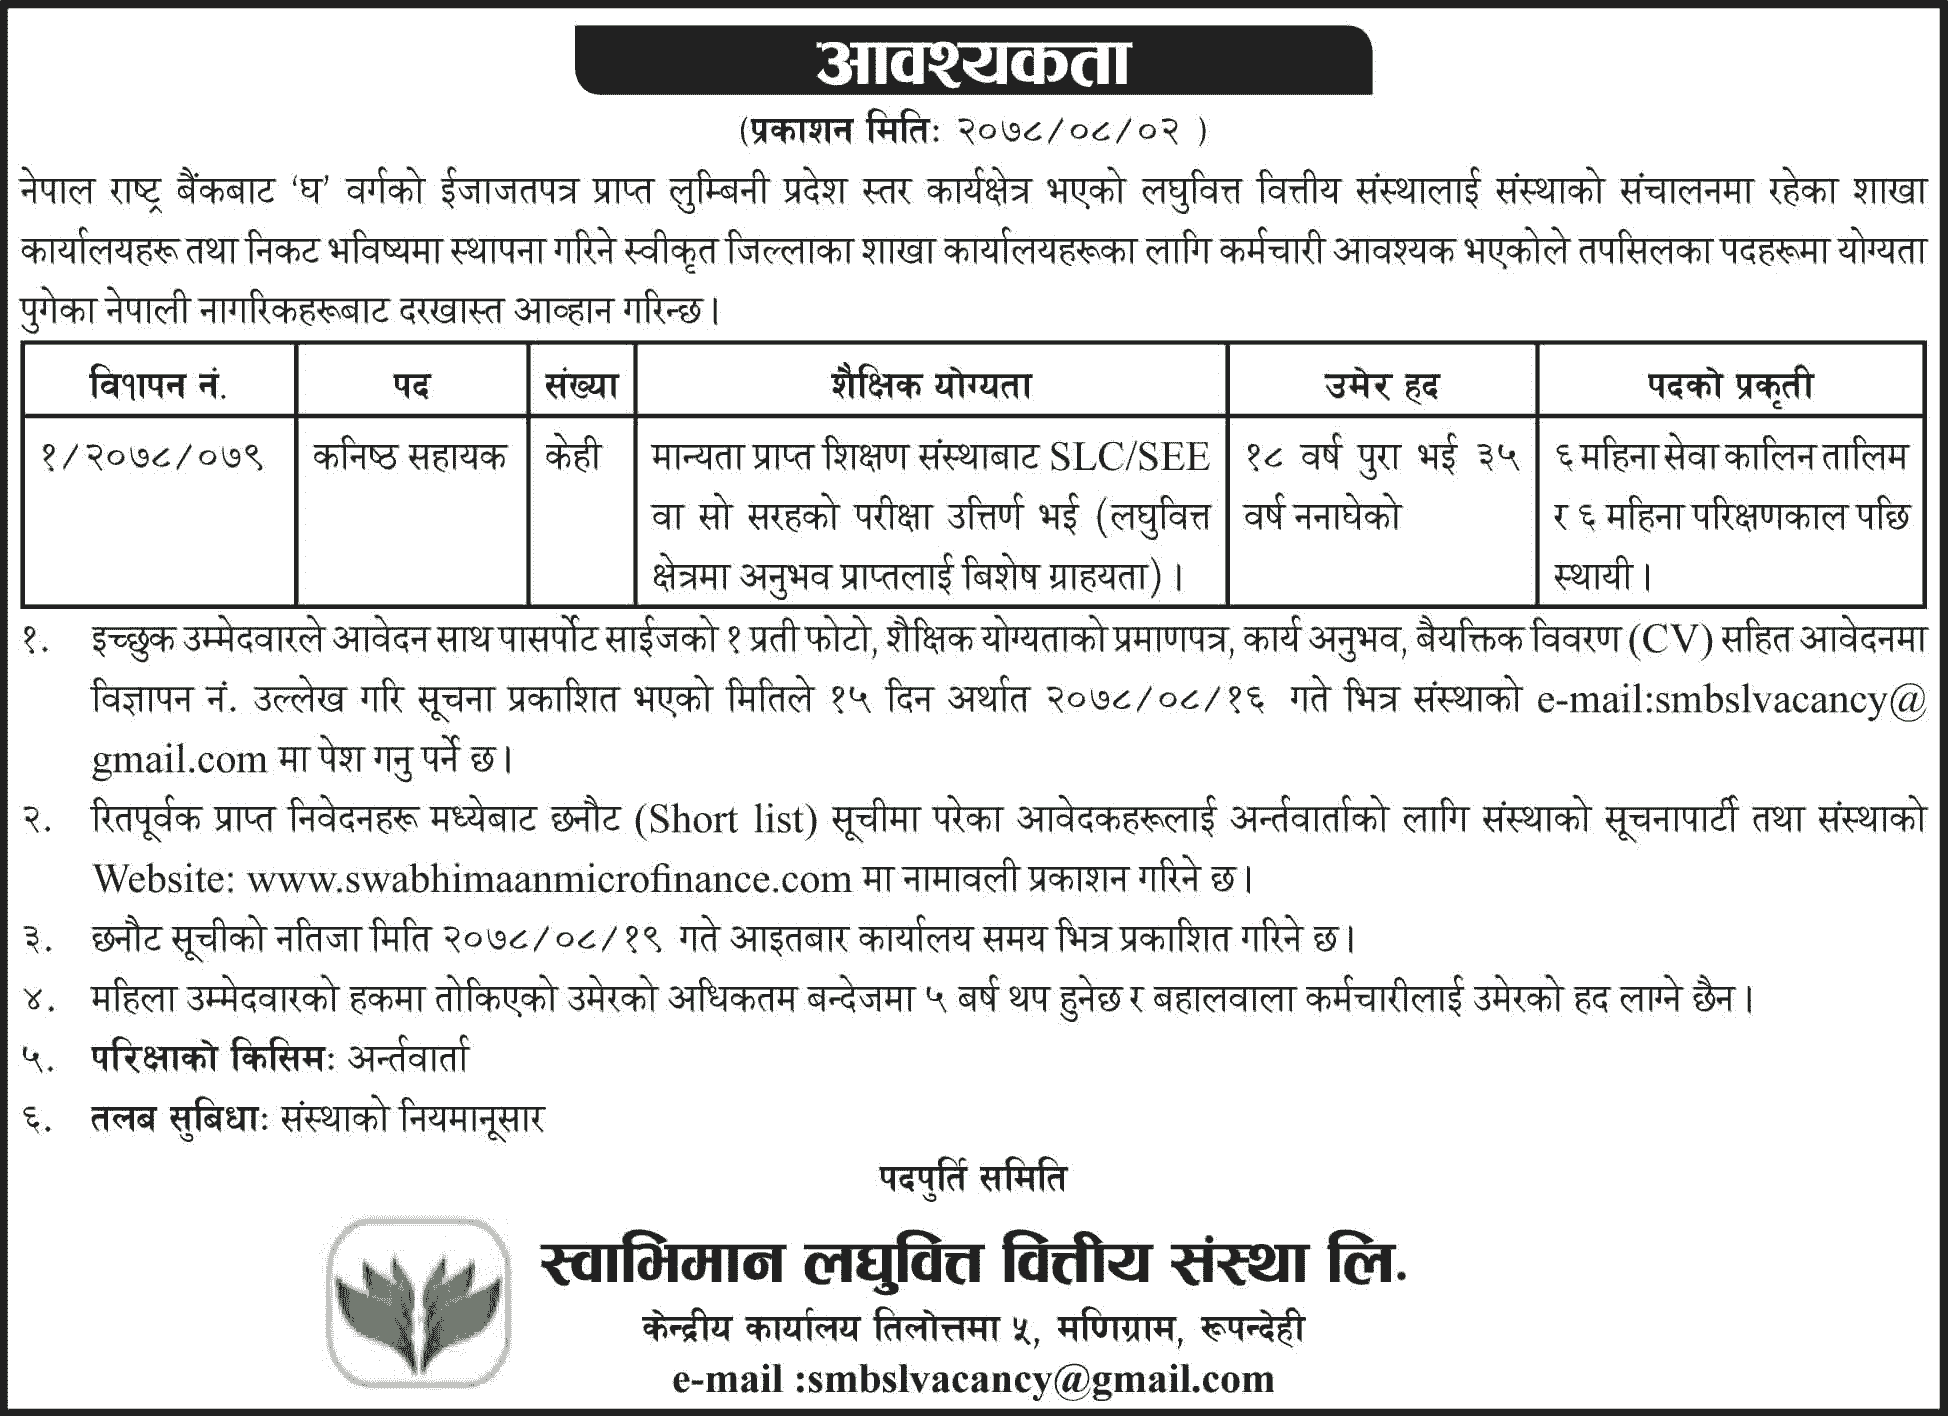 Swabhimaan Laghubitta Bittiya Sanstha Limited Vacancy for Junior Assistant